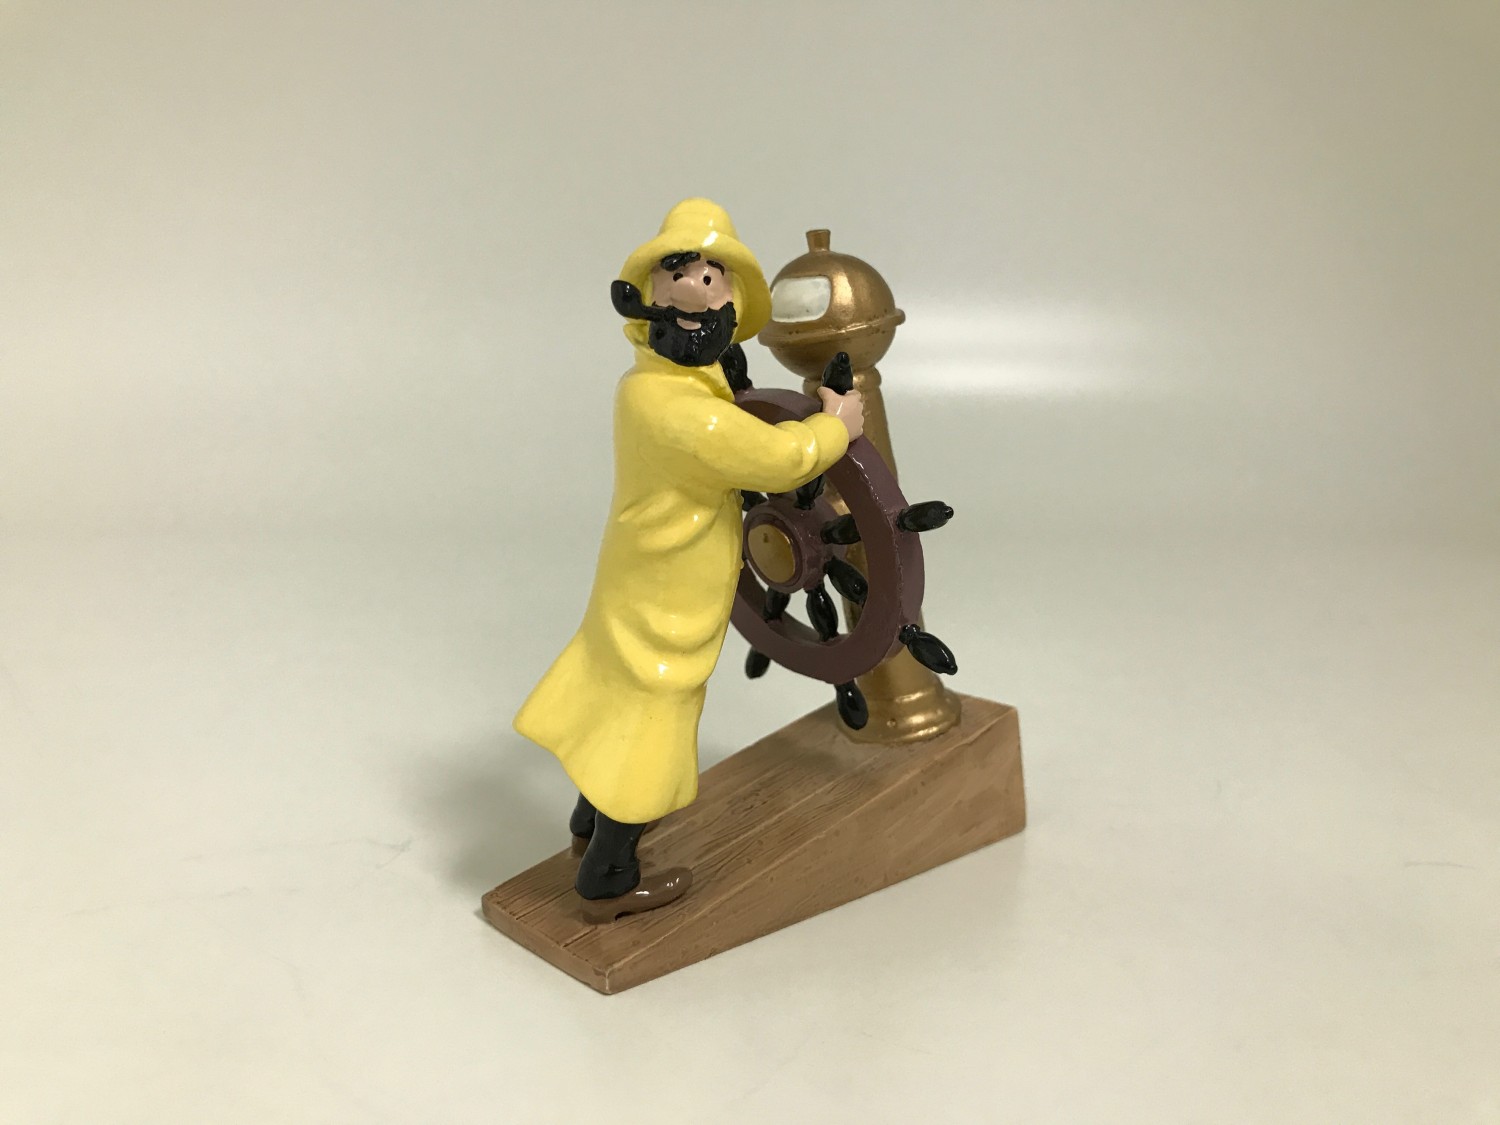 Tintin ciré & Haddock à la barre - Figurines métal 9 cm